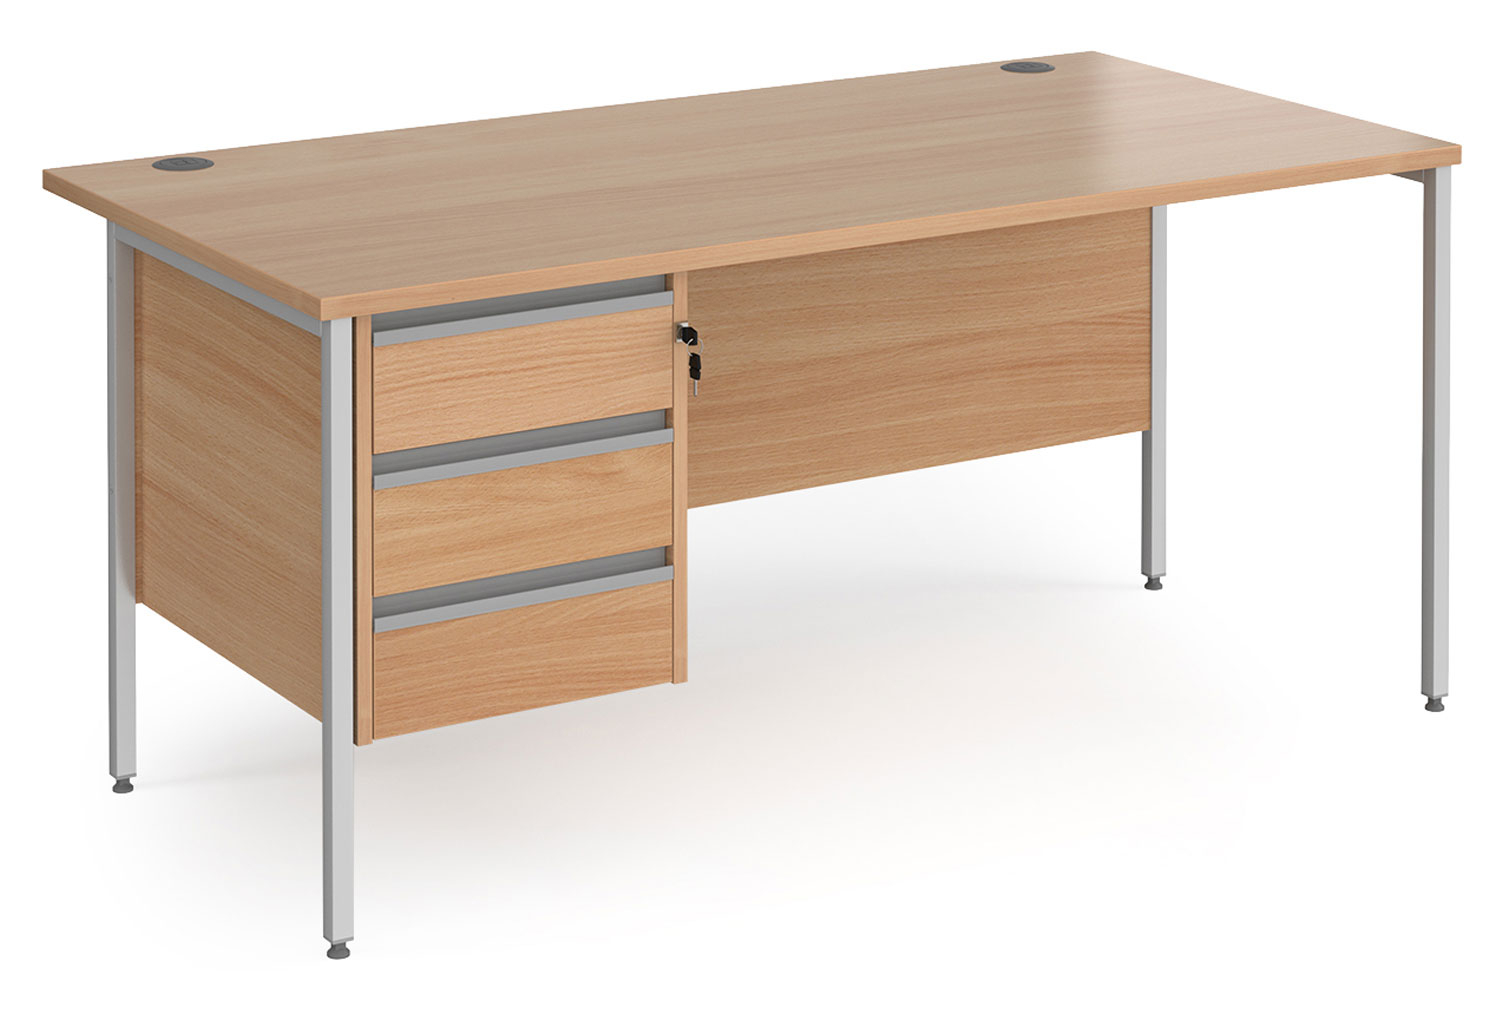 Value Line Classic+ Rectangular H-Leg Office Desk 3 Drawers (Silver Leg), 160wx80dx73h (cm), Beech